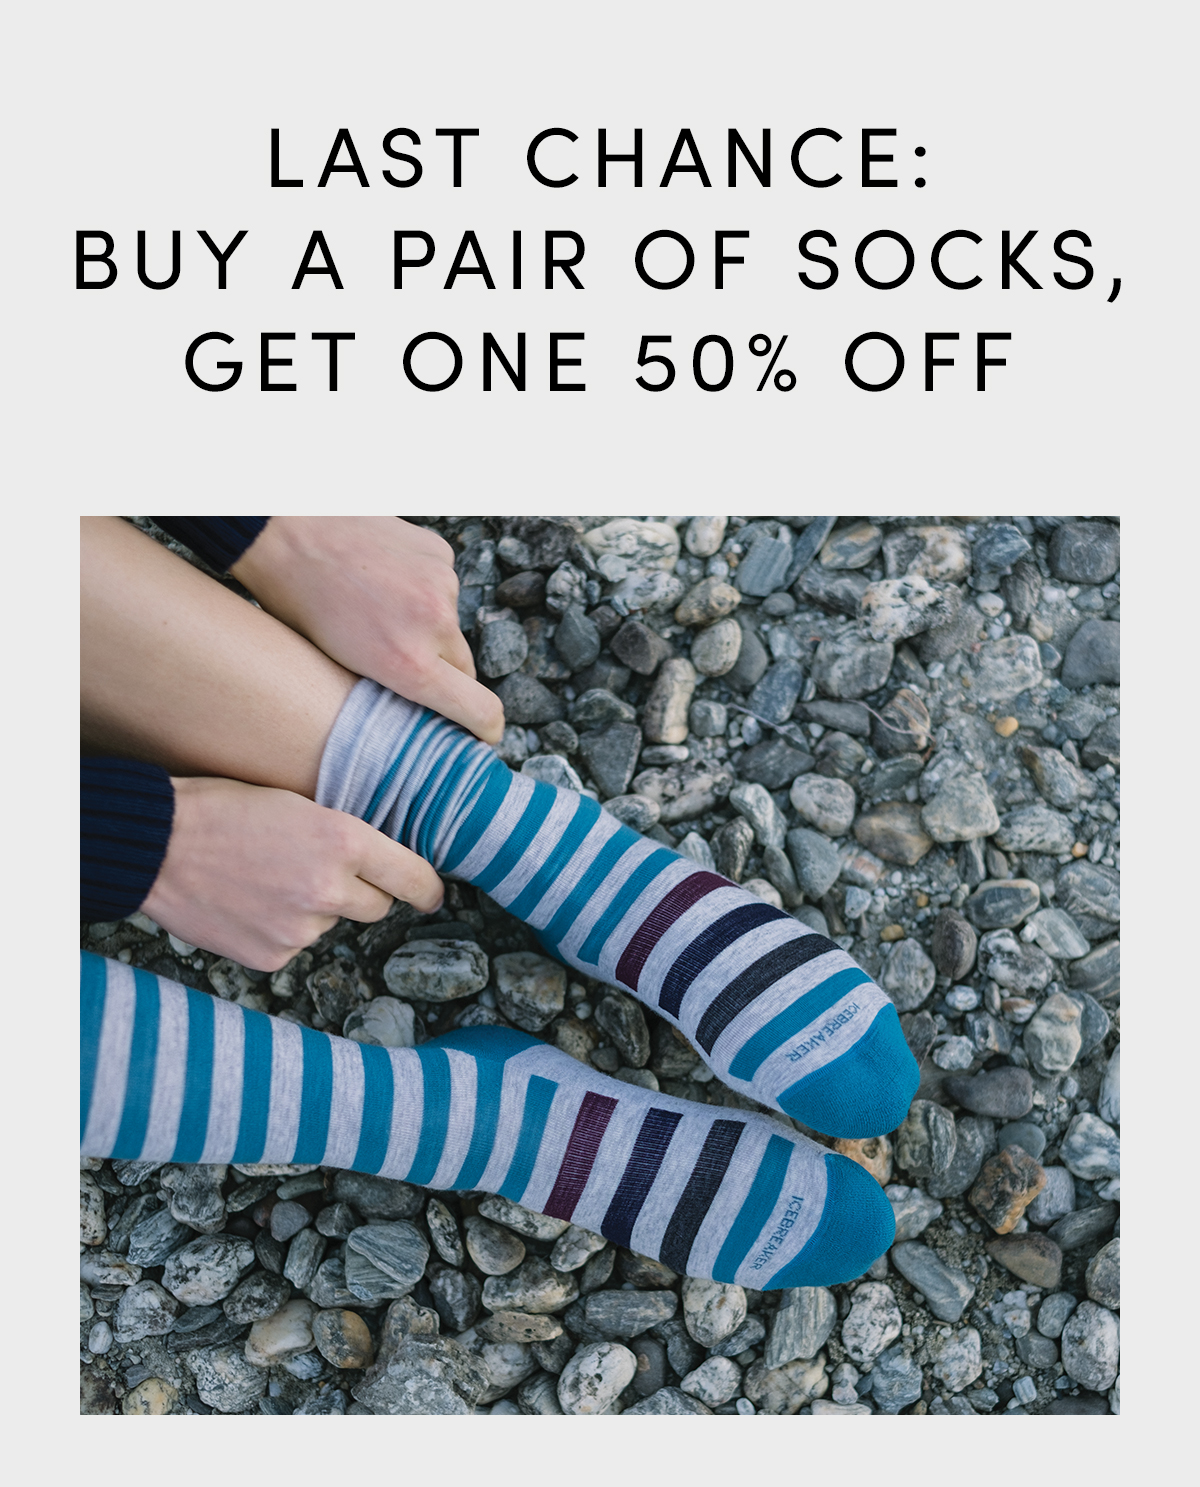 Buy a pair of socks, get one 50% off